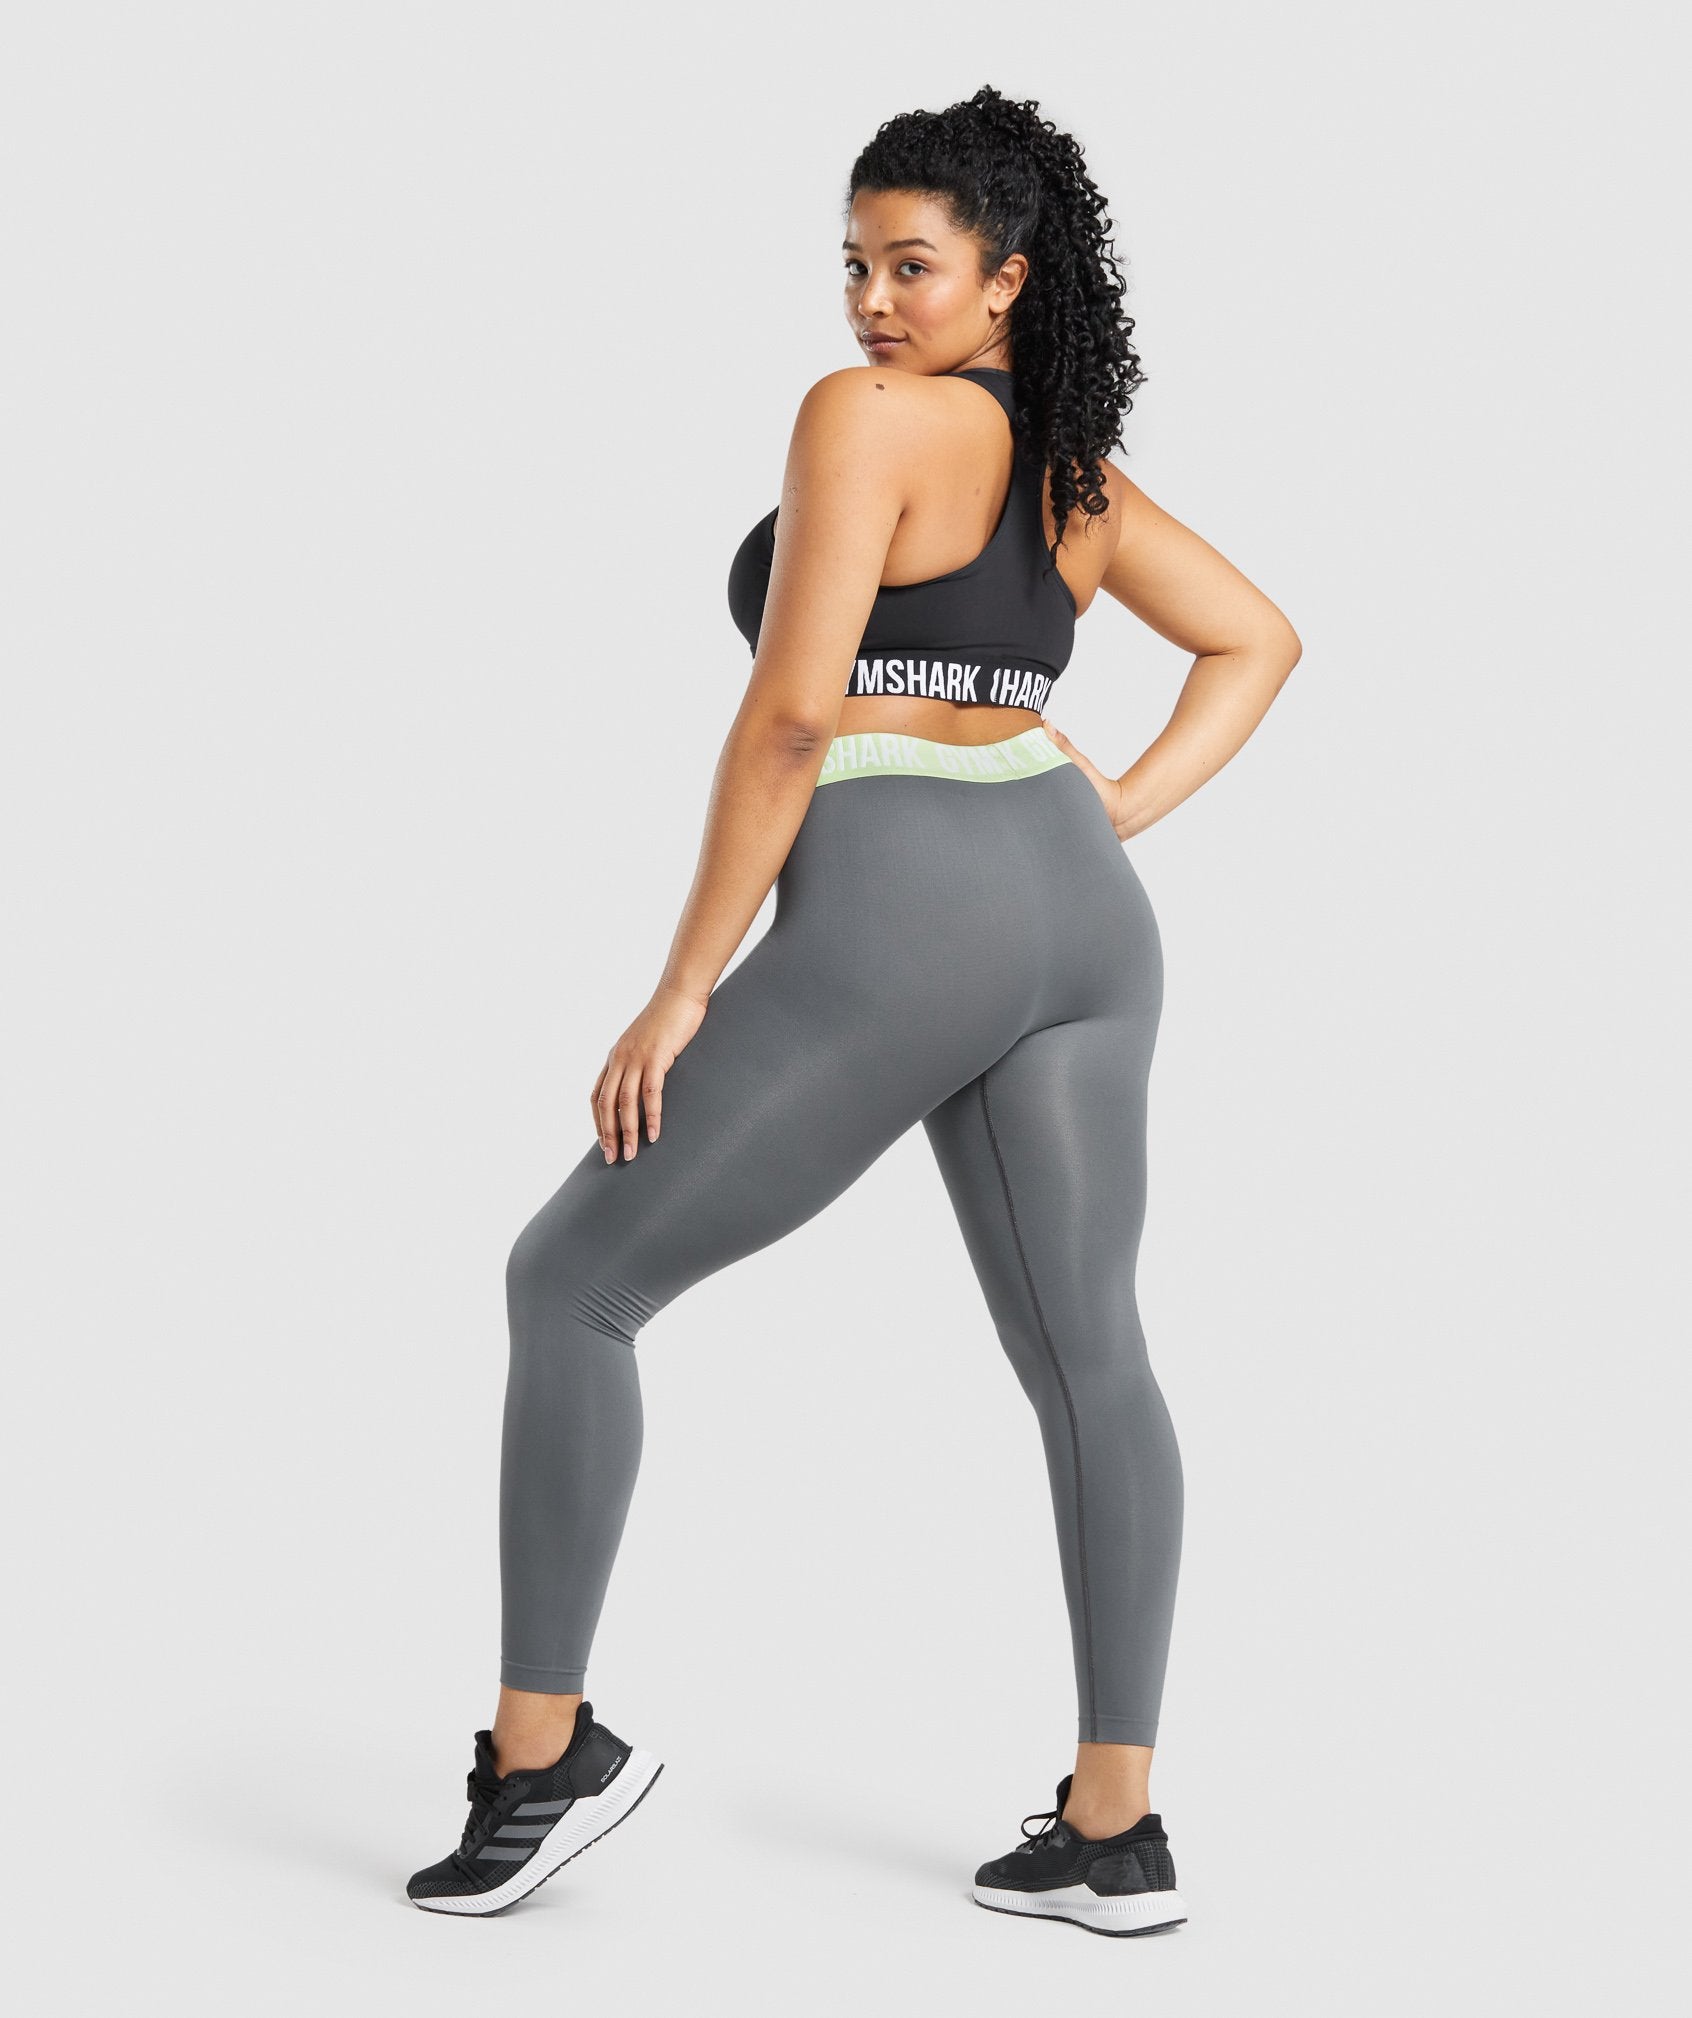 Gymshark Fit Seamless Legging XS- Charcoal/White, Women's Fashion